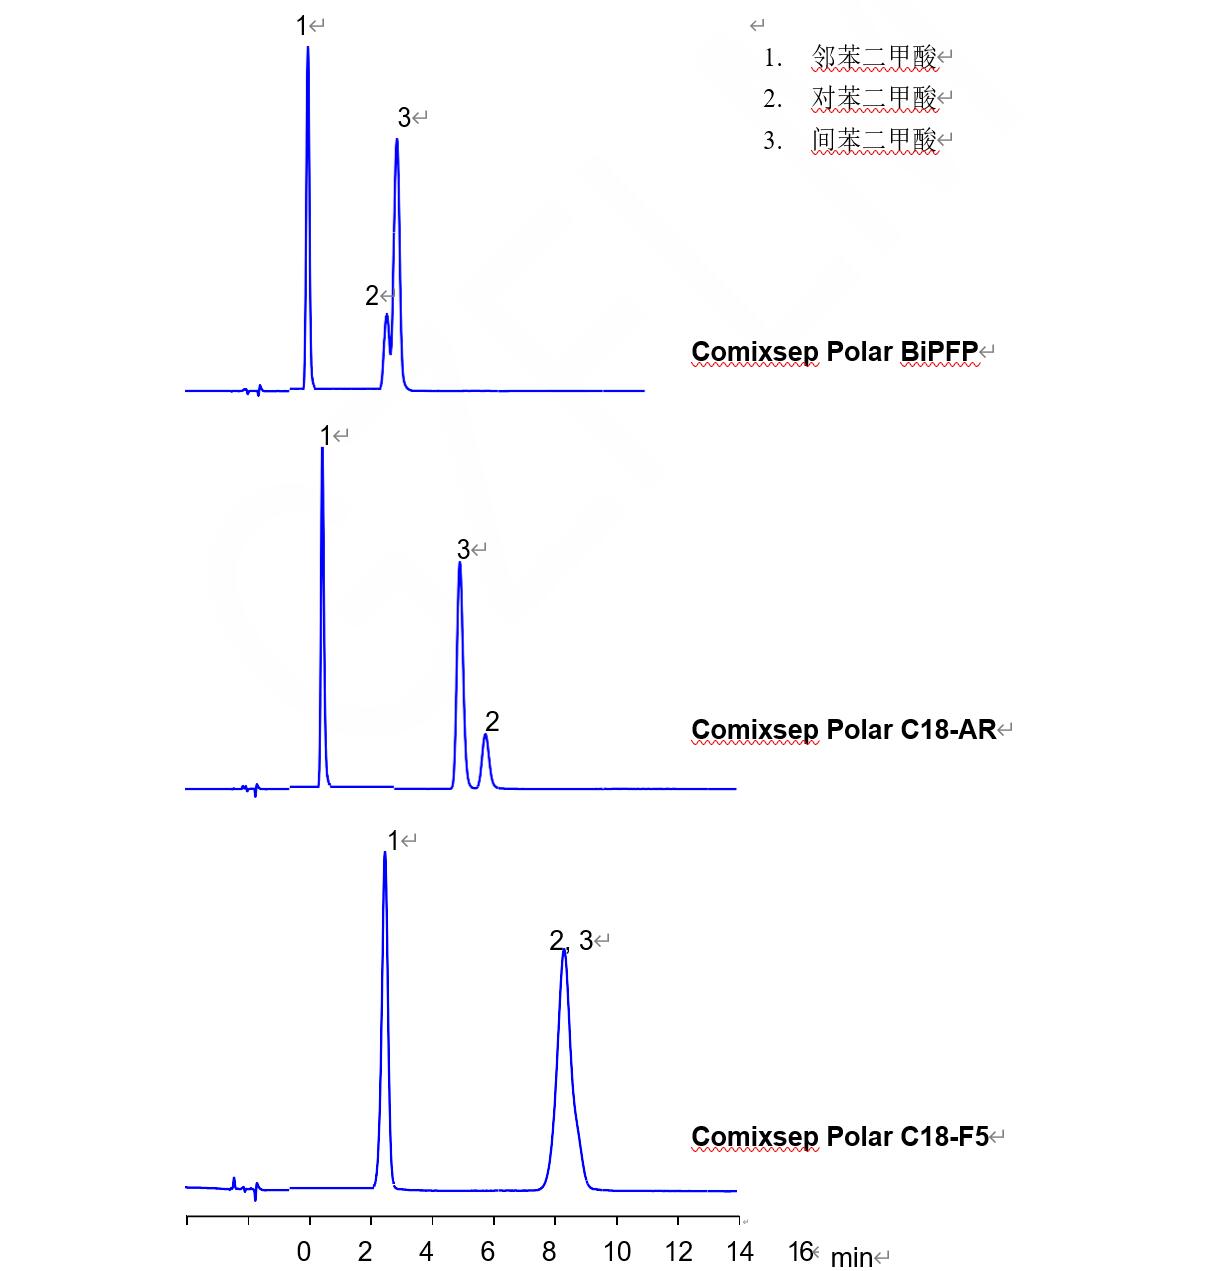 Comixsep 三款固定相分离苯二甲酸异构体的选择性对比